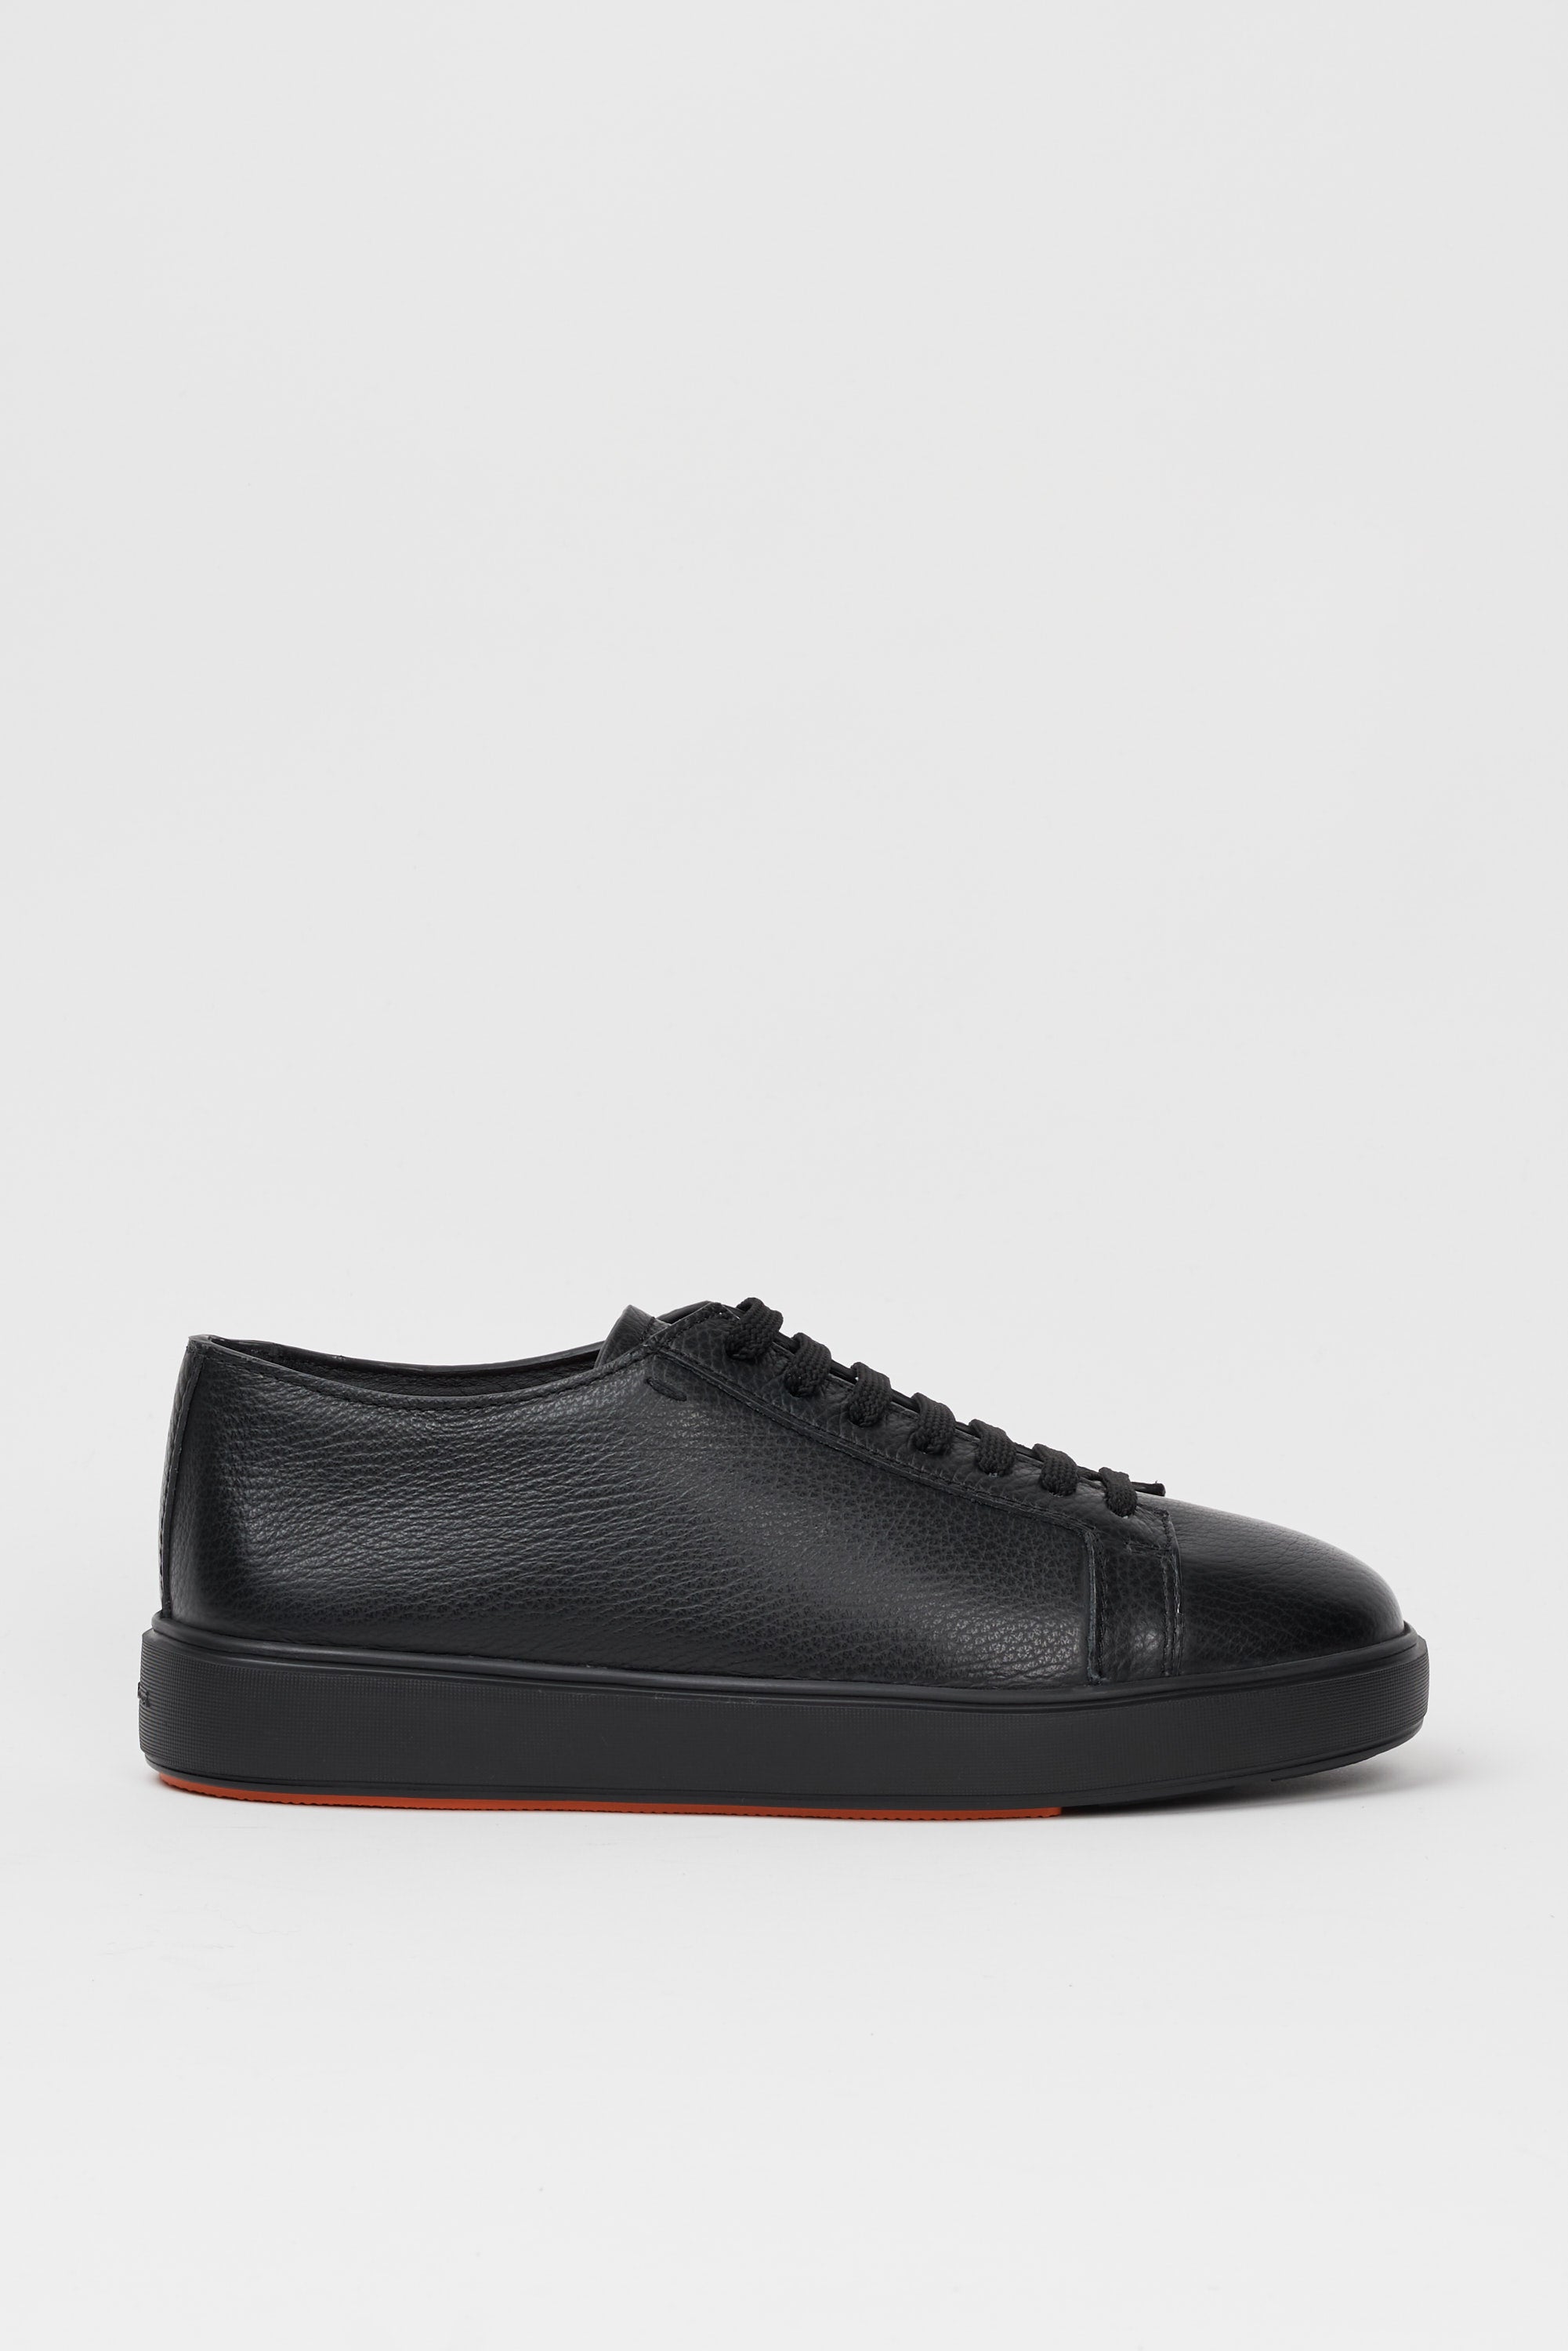 Santoni Leather Sneakers Black-1